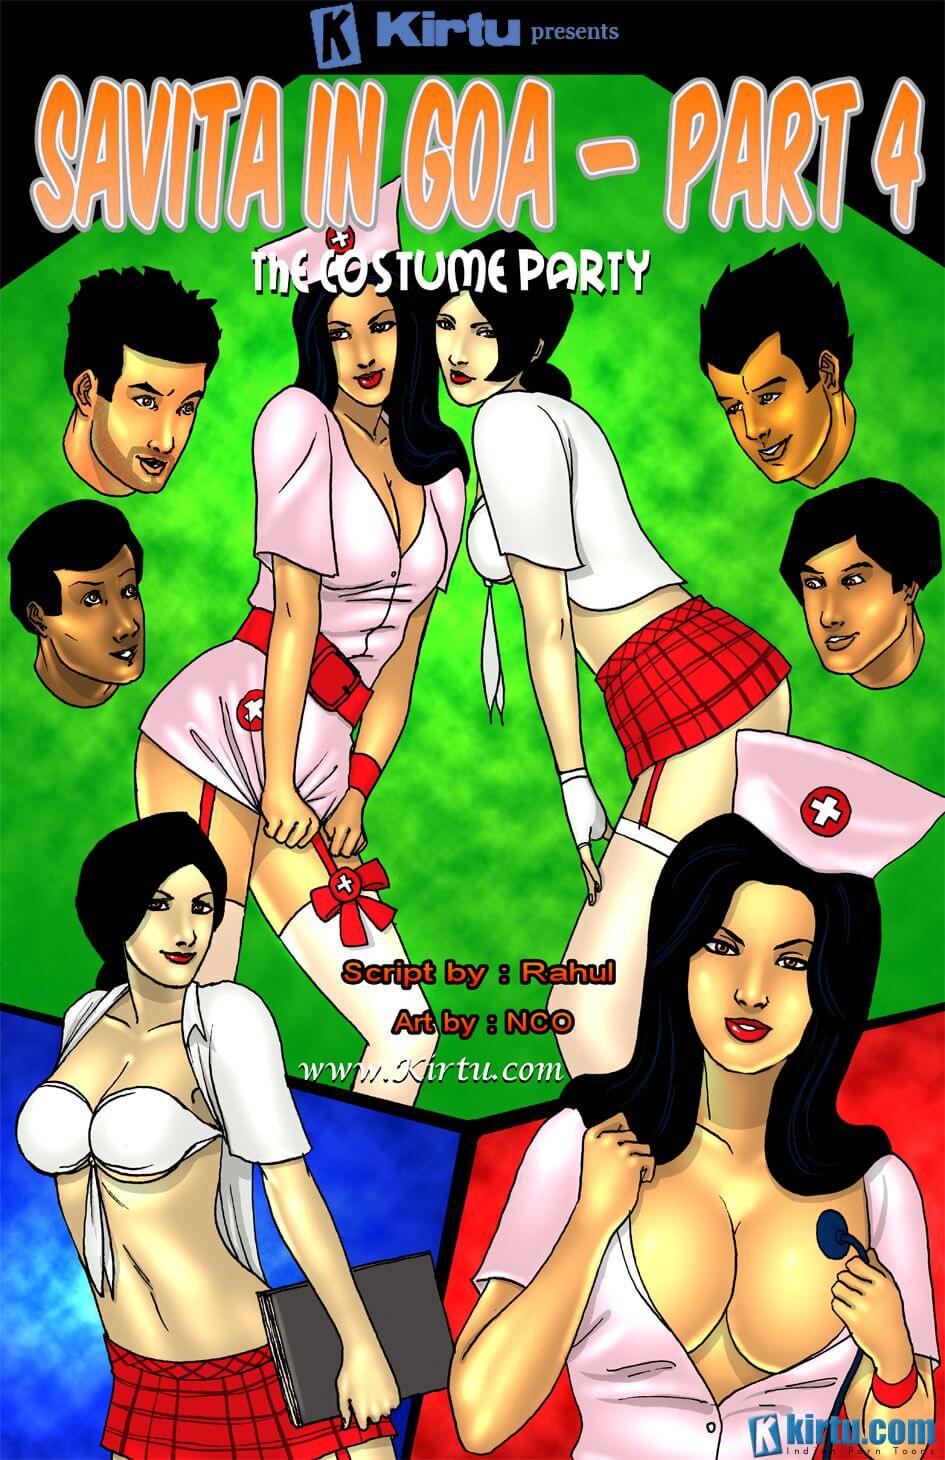 Savita Bhabhi in Goa Episode 4 - The Costume Party